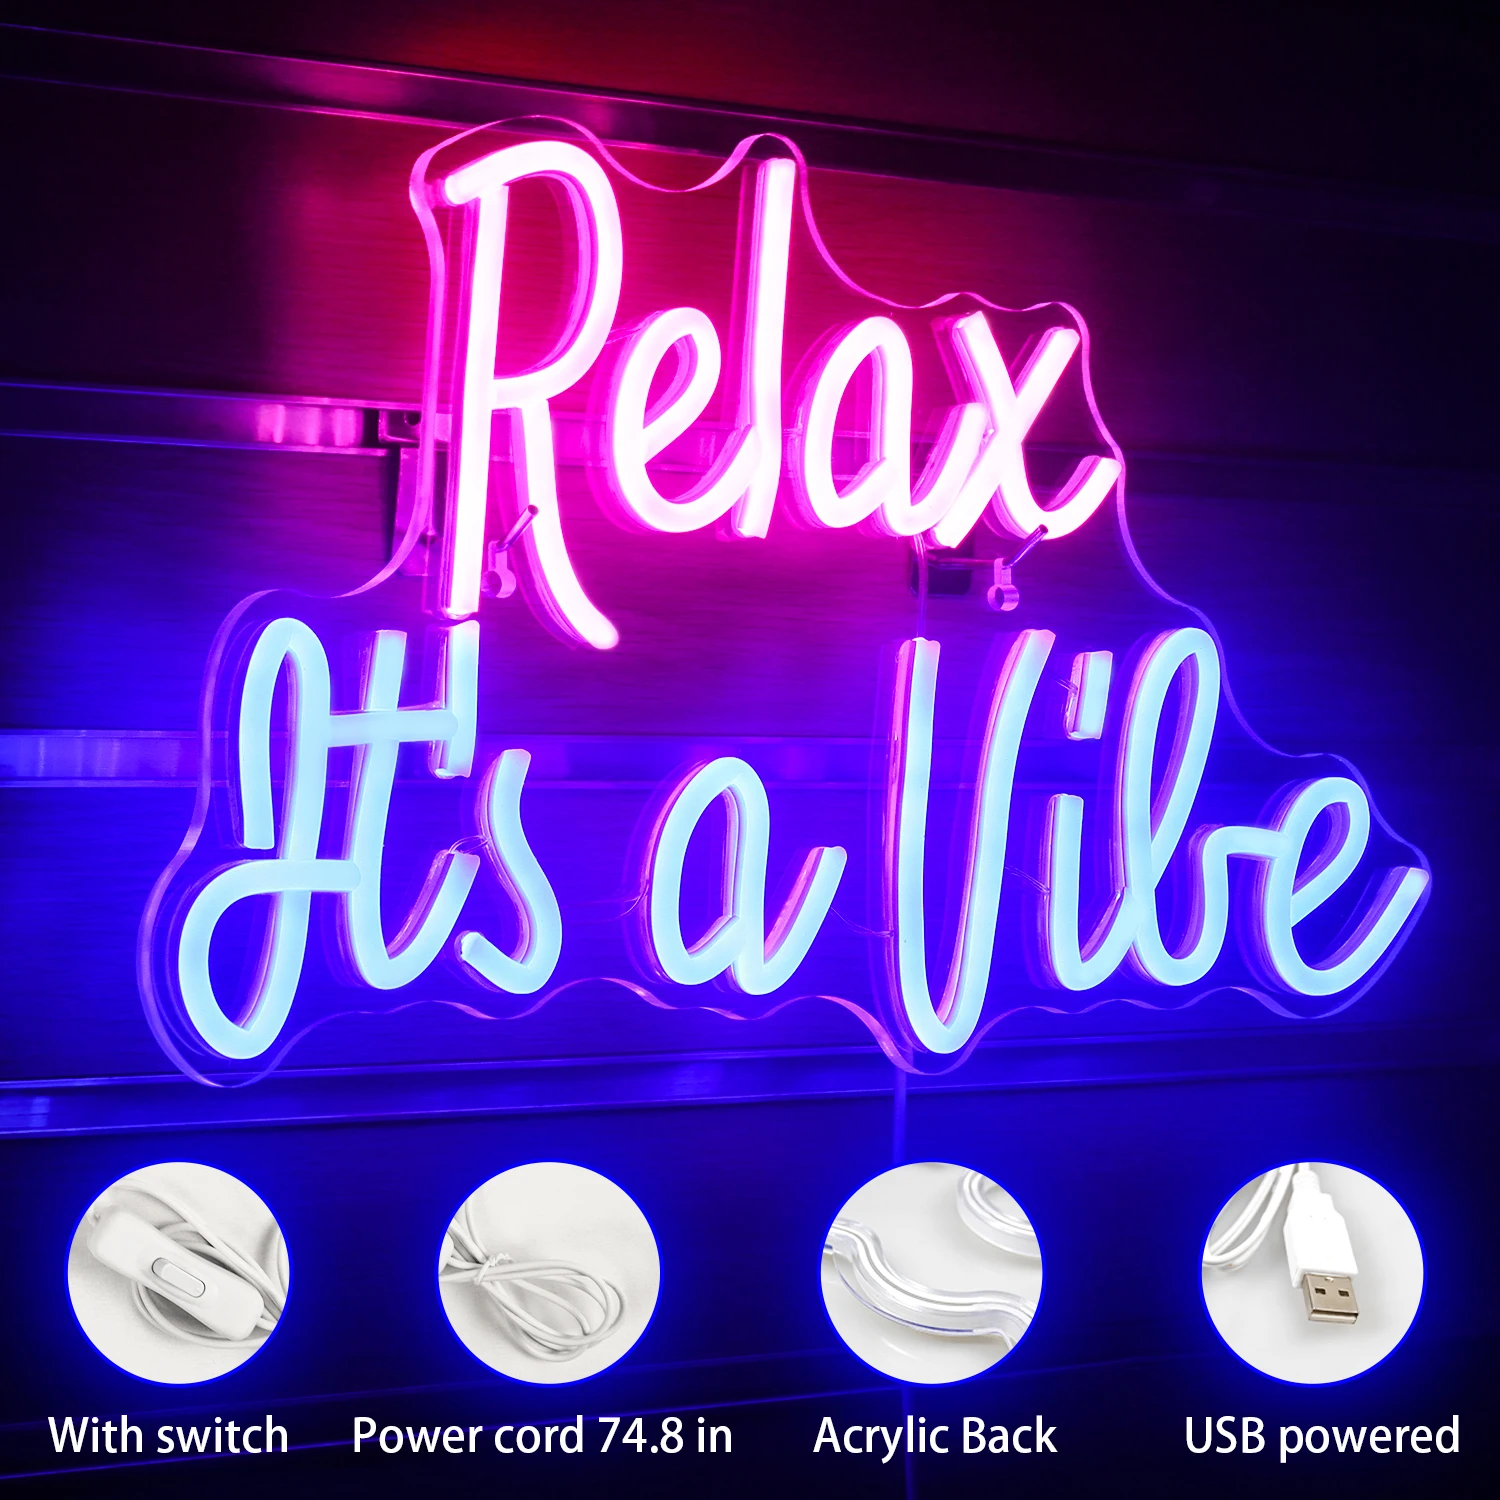 Relax It's a Vibe letrero de neón LED para decoración de pared de habitación, alimentado por USB para fiesta, dormitorio, sala de juegos, Club, fiesta, luz de juego, decoración de cueva de hombre